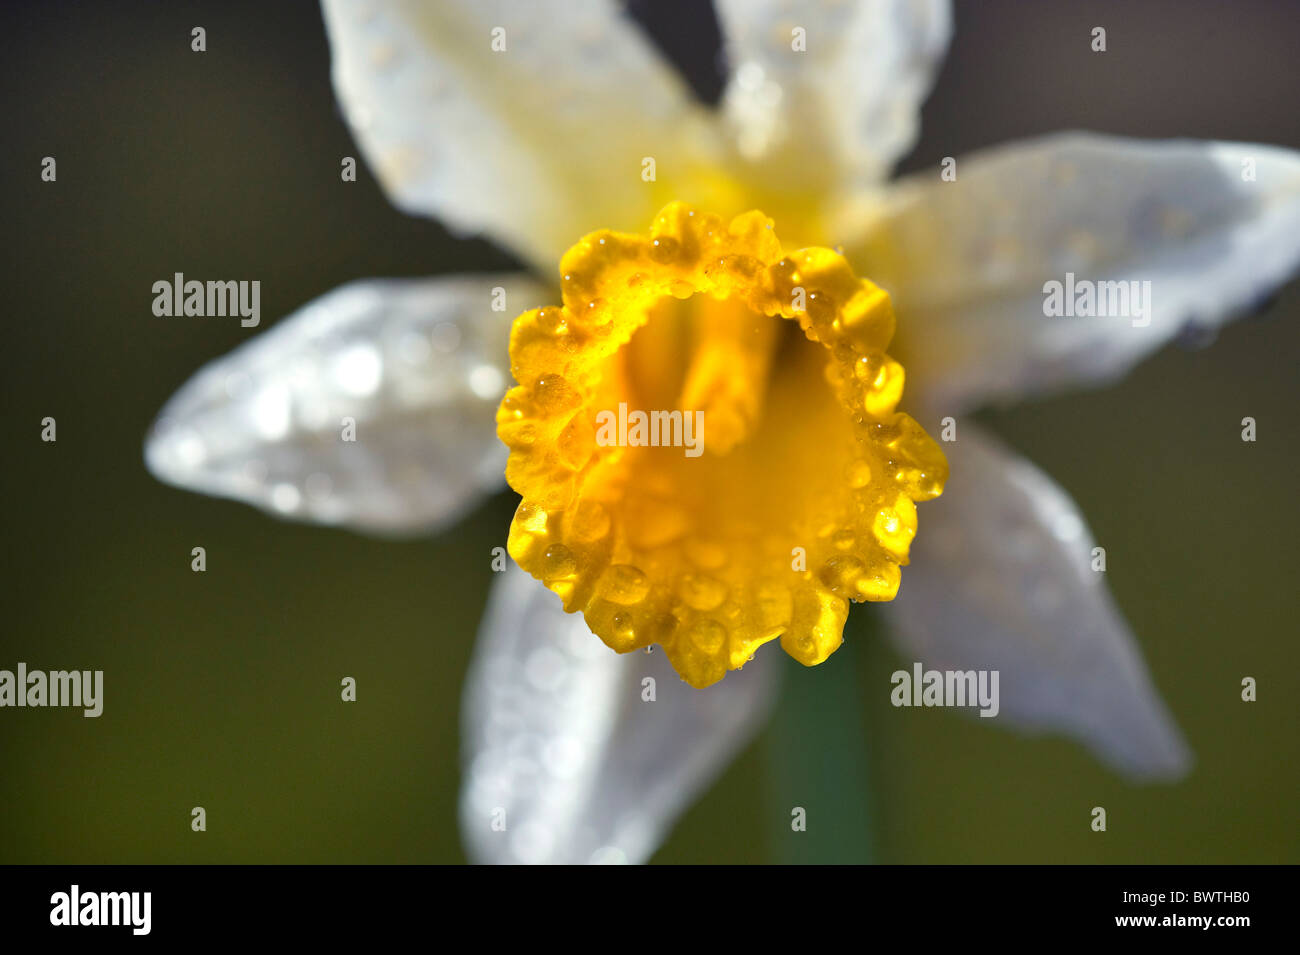 Wild Daffodil Narcissus pseudonarcissus syn lobularis UK Stock Photo